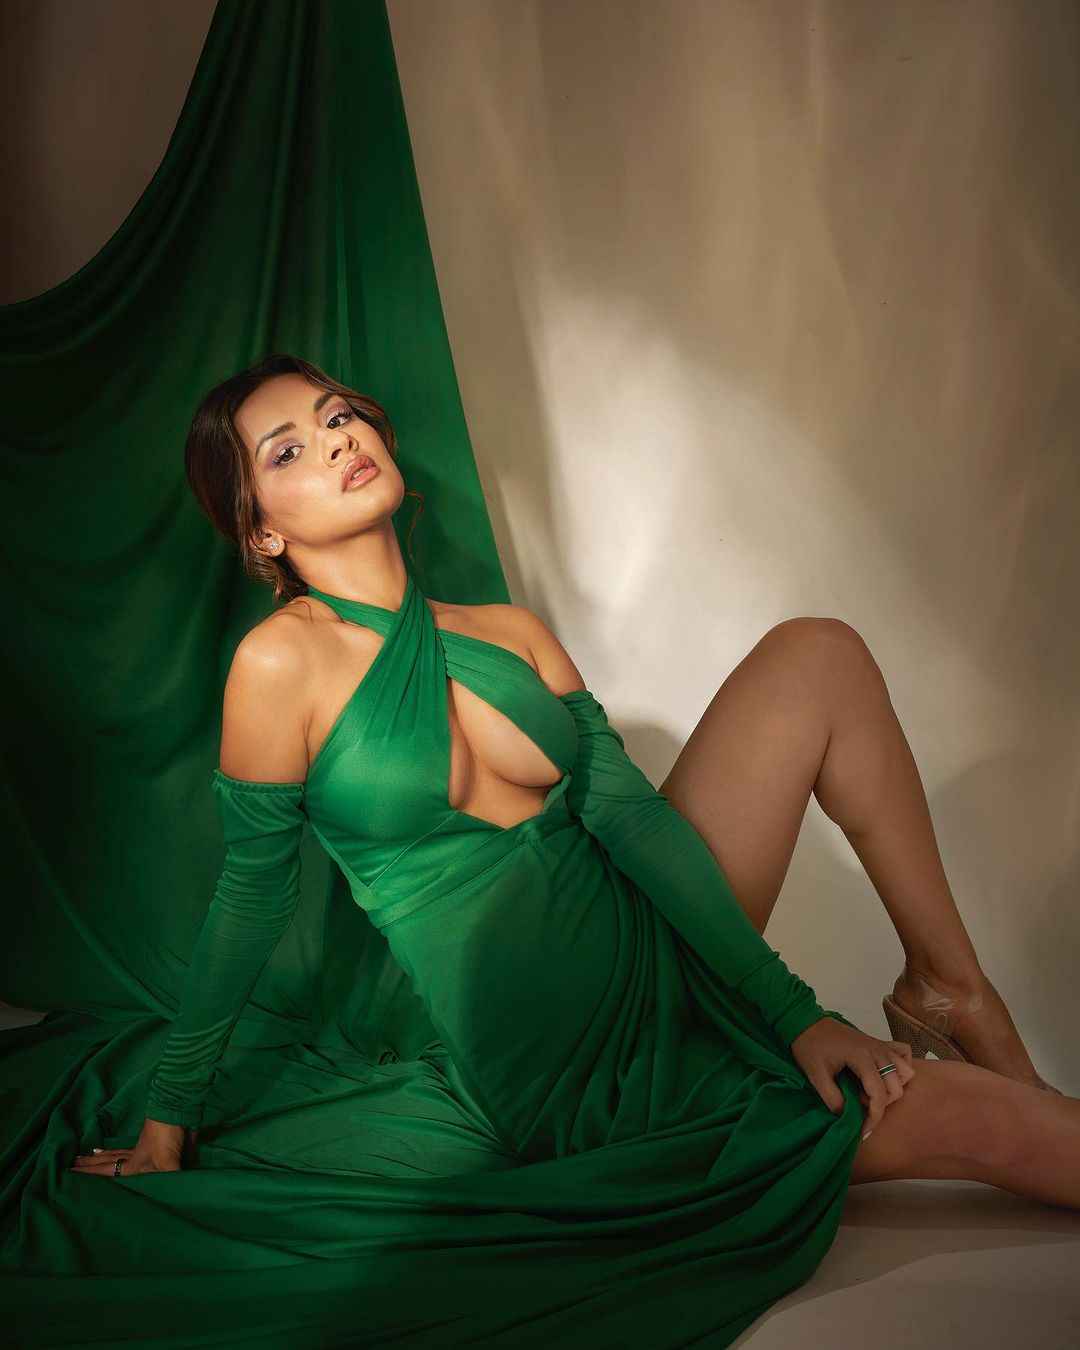 Avneet Kaur Green Dress Nude Boobs